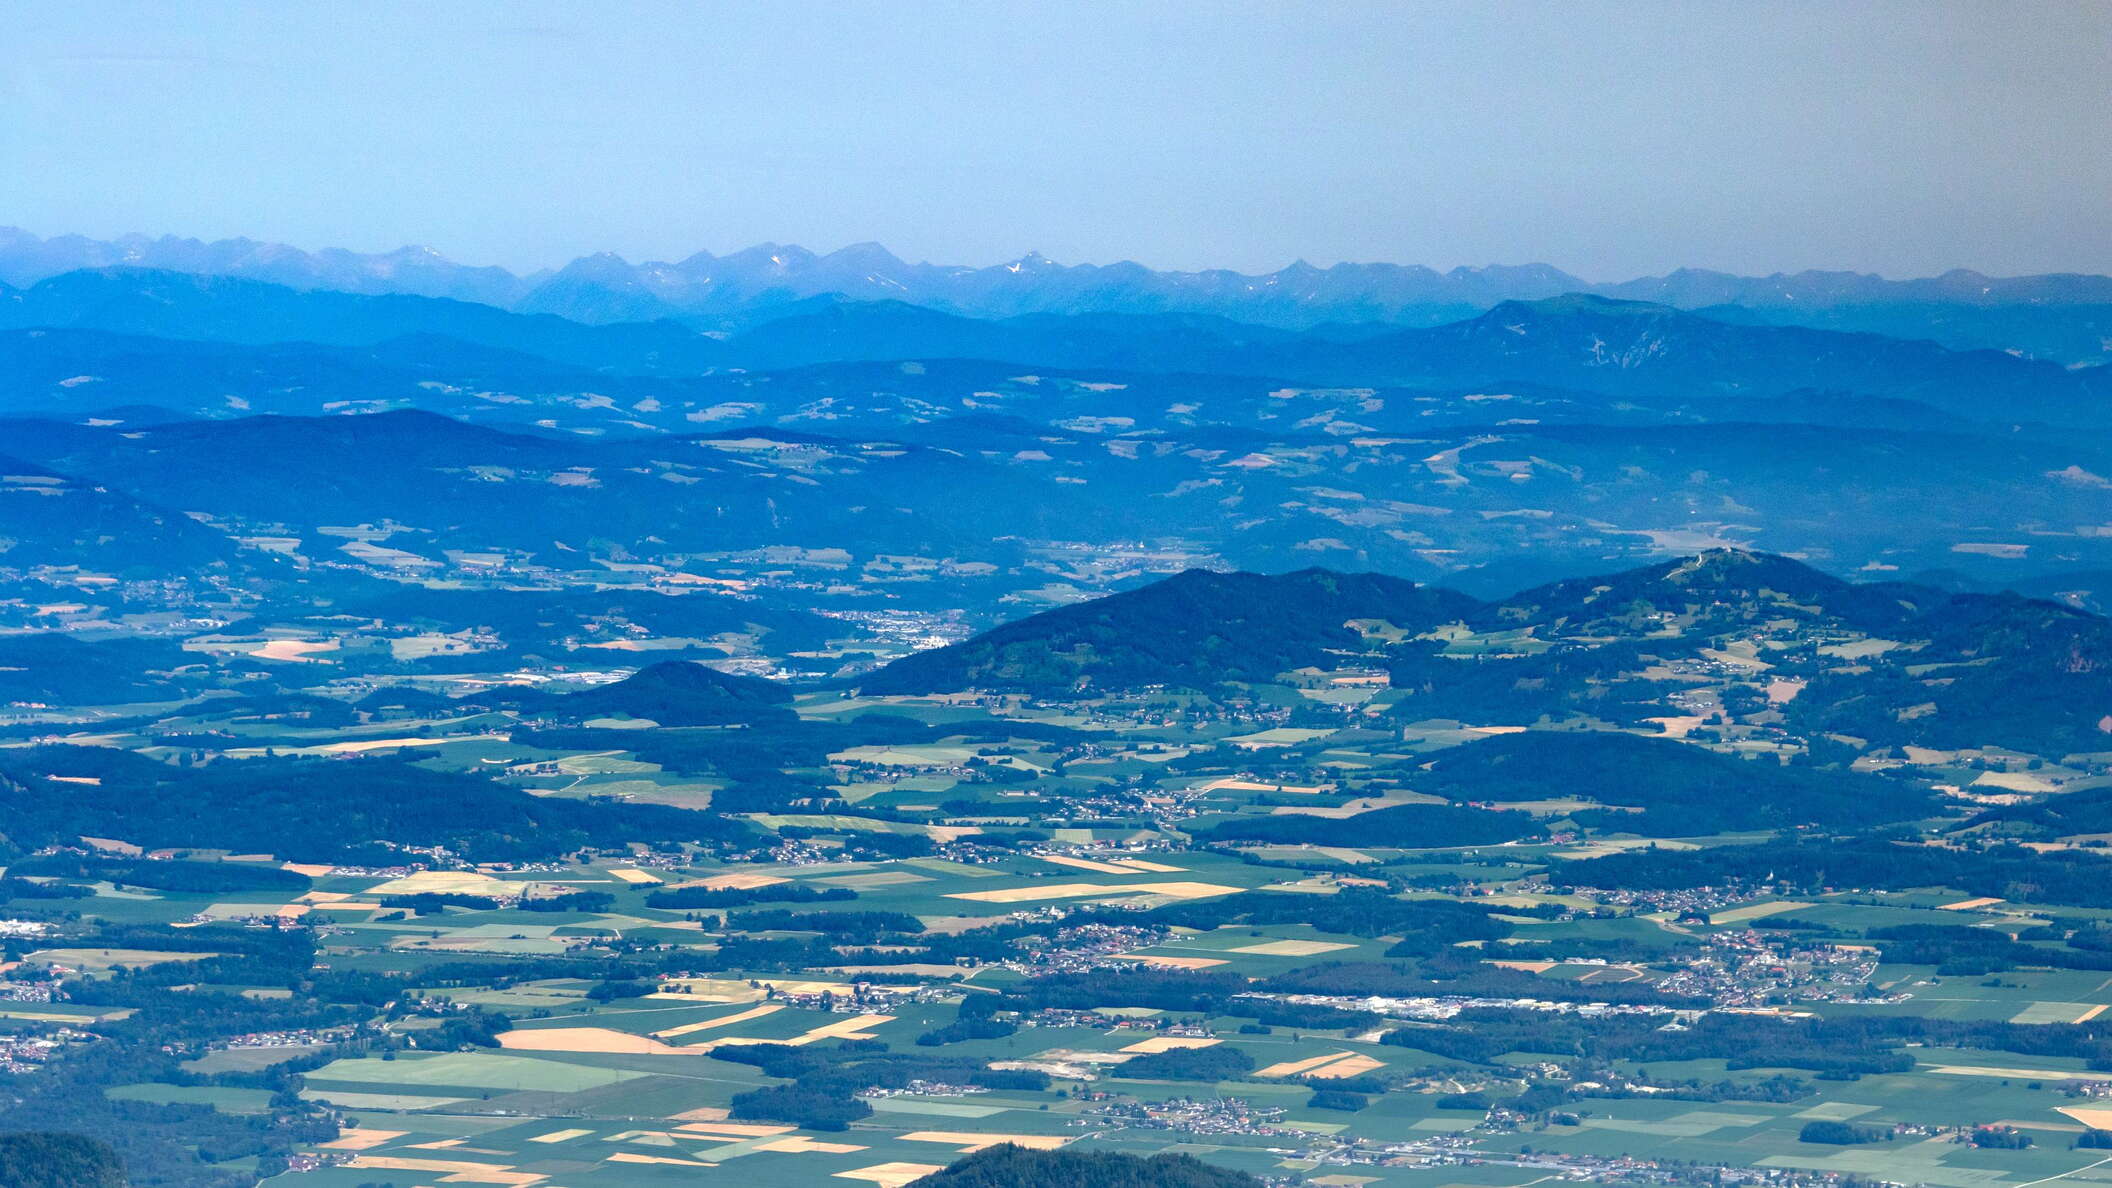 Klagenfurt Basin and Wölzer Tauern